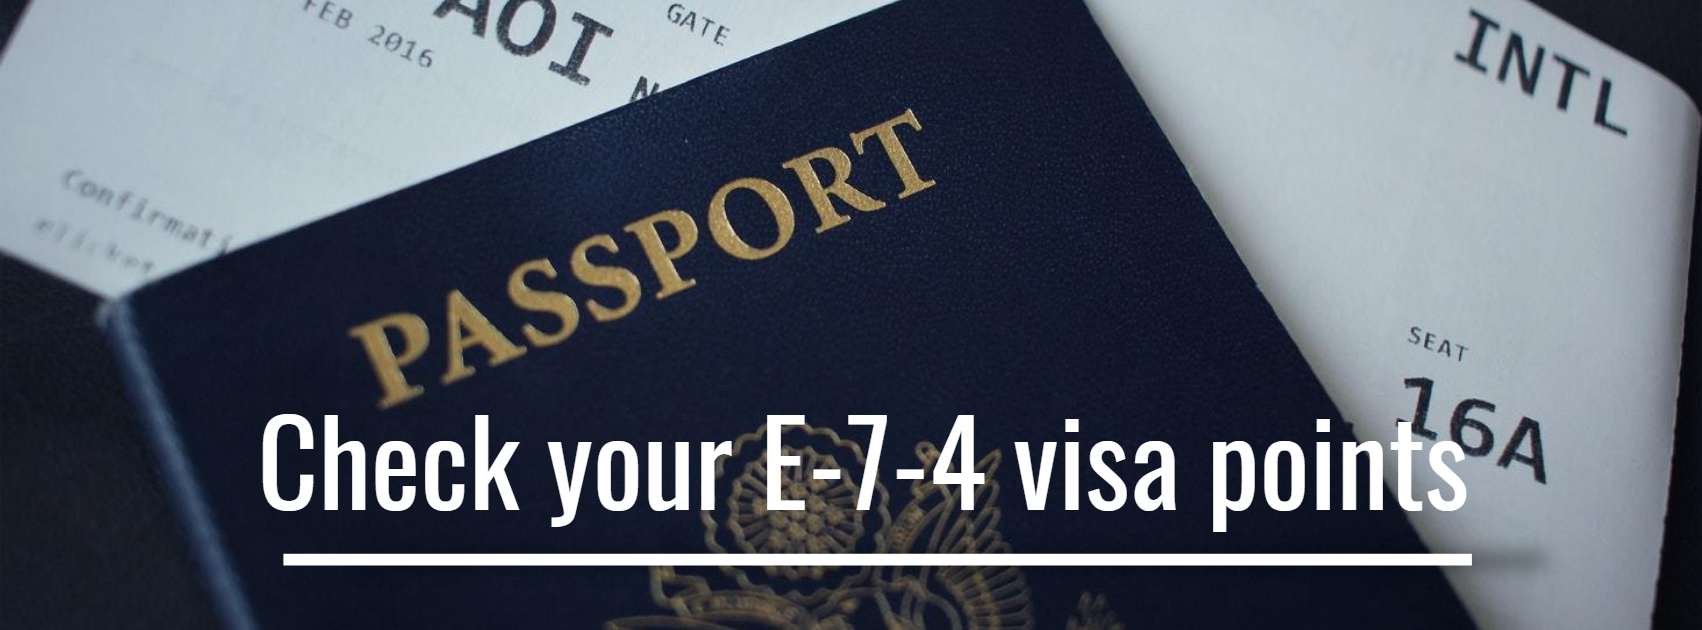 E-7-4 visa points